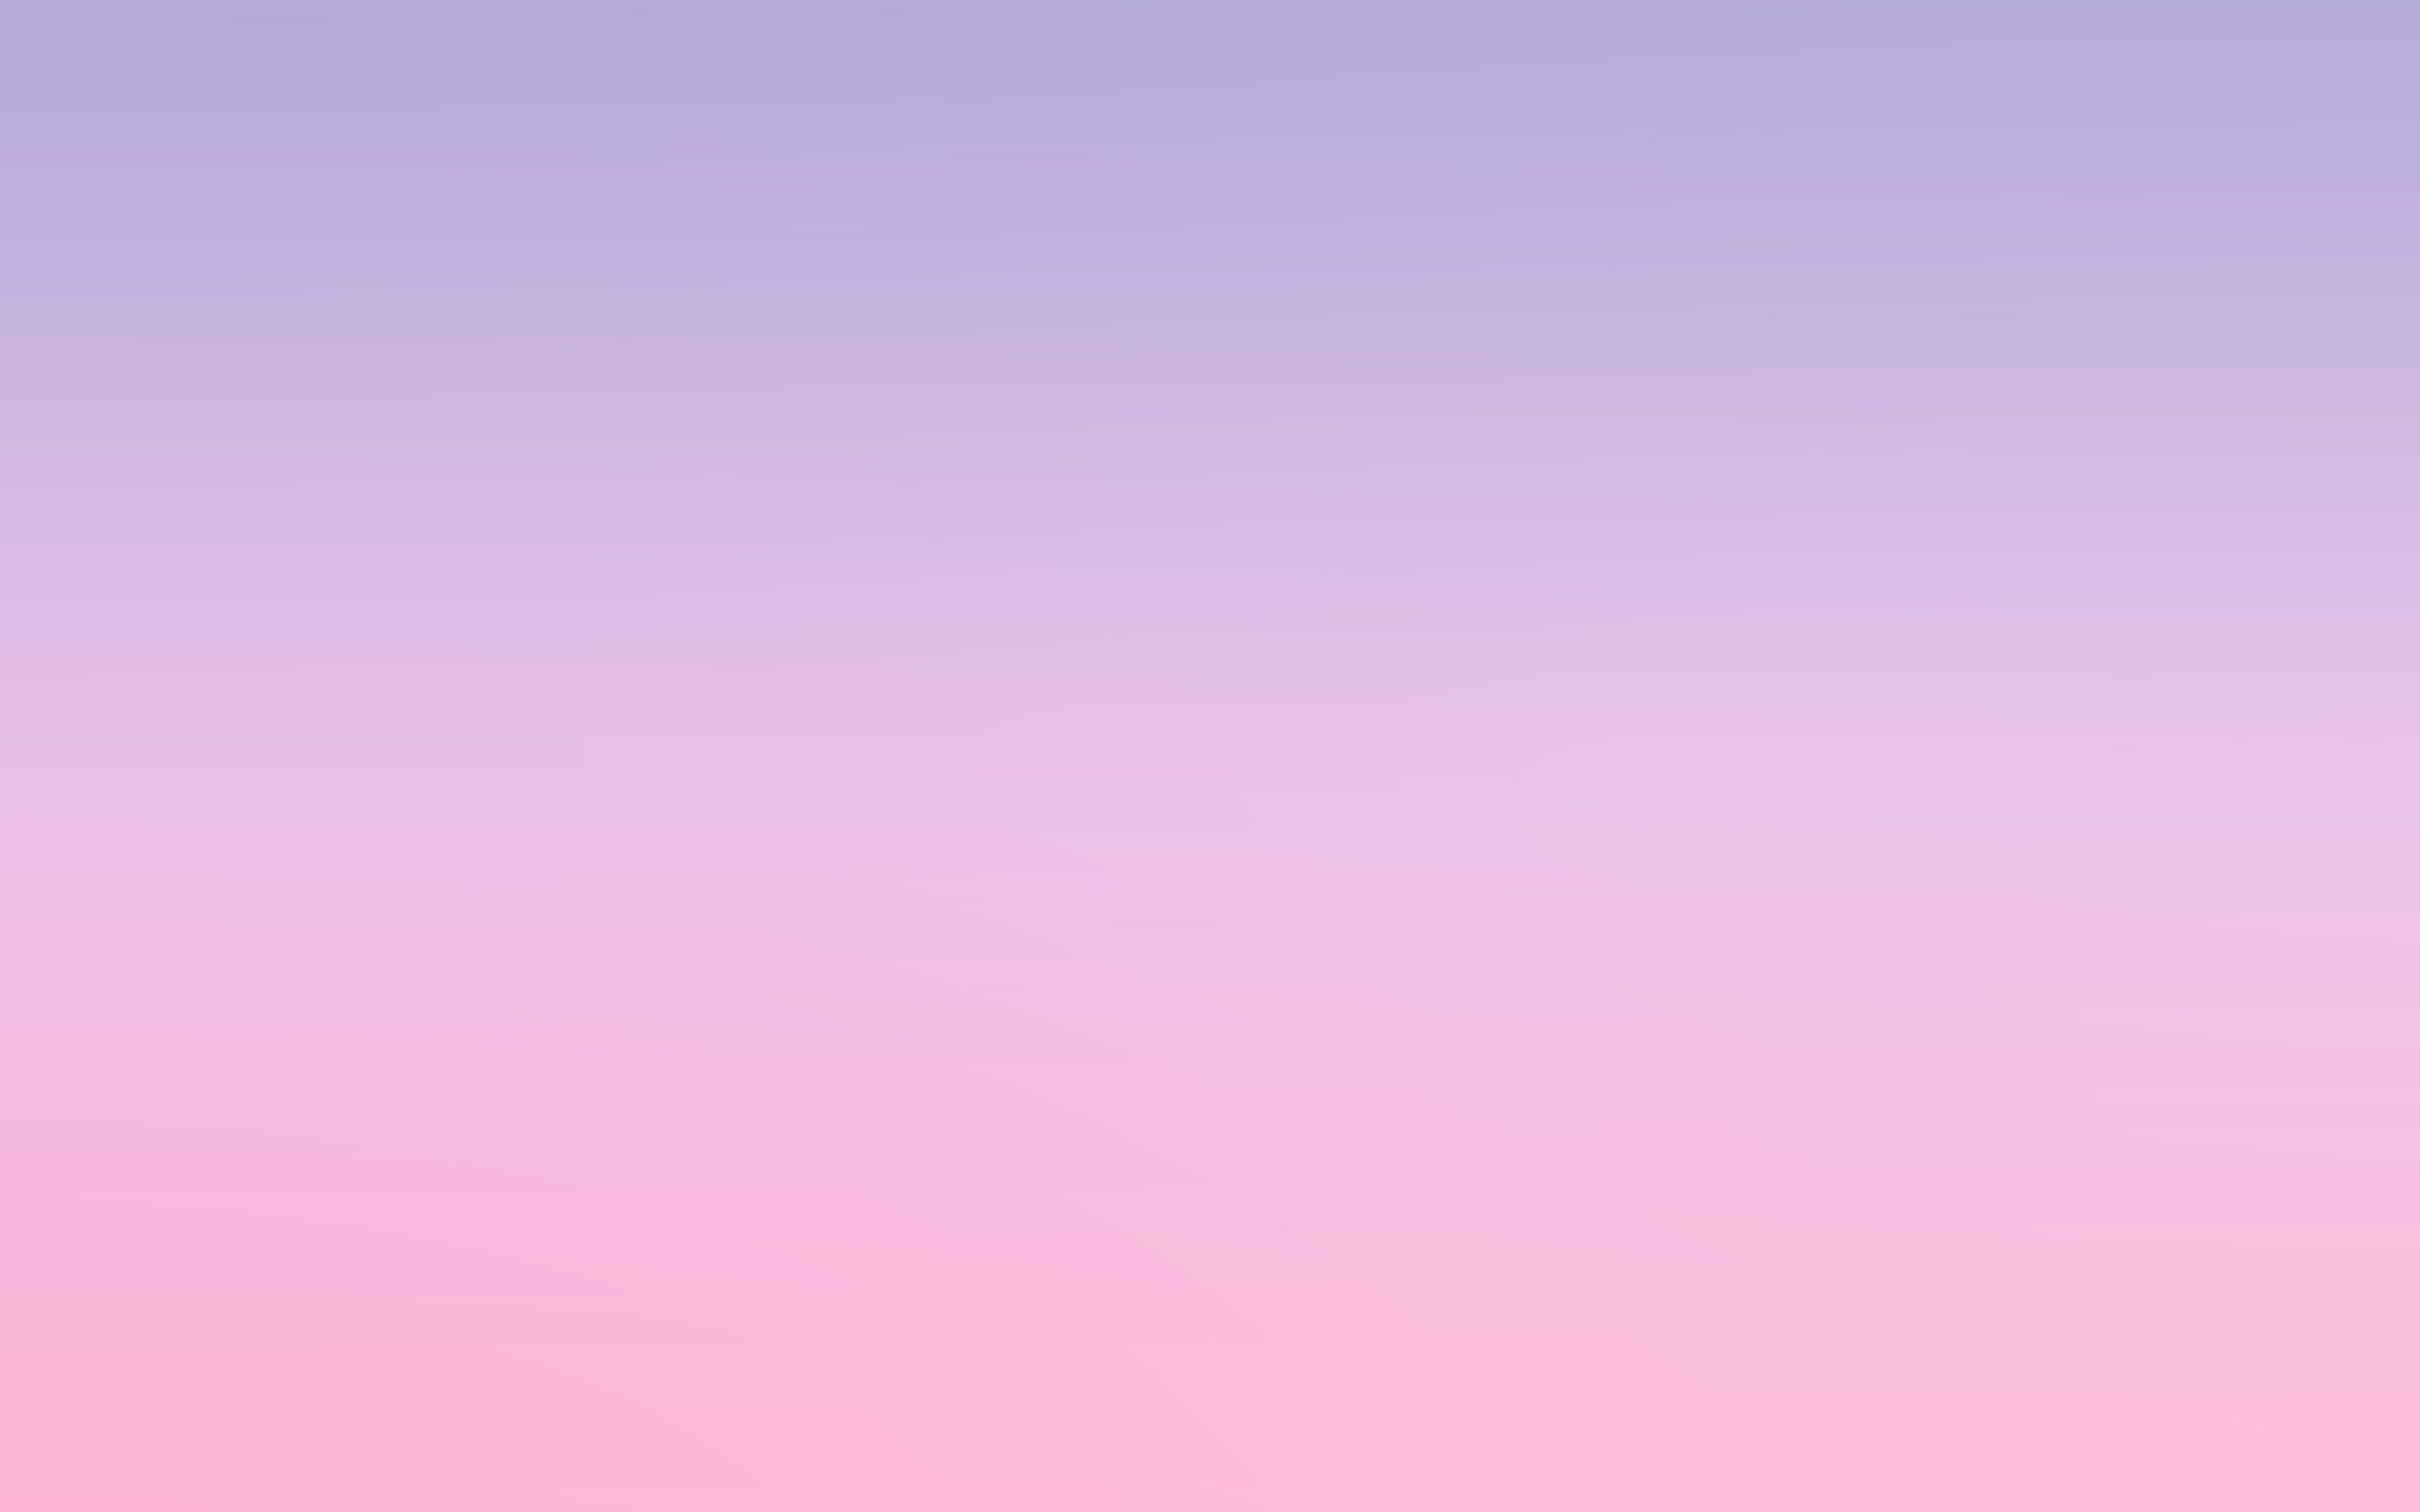 wallpaper for desktop, laptop. blur gradation pink purple pastel